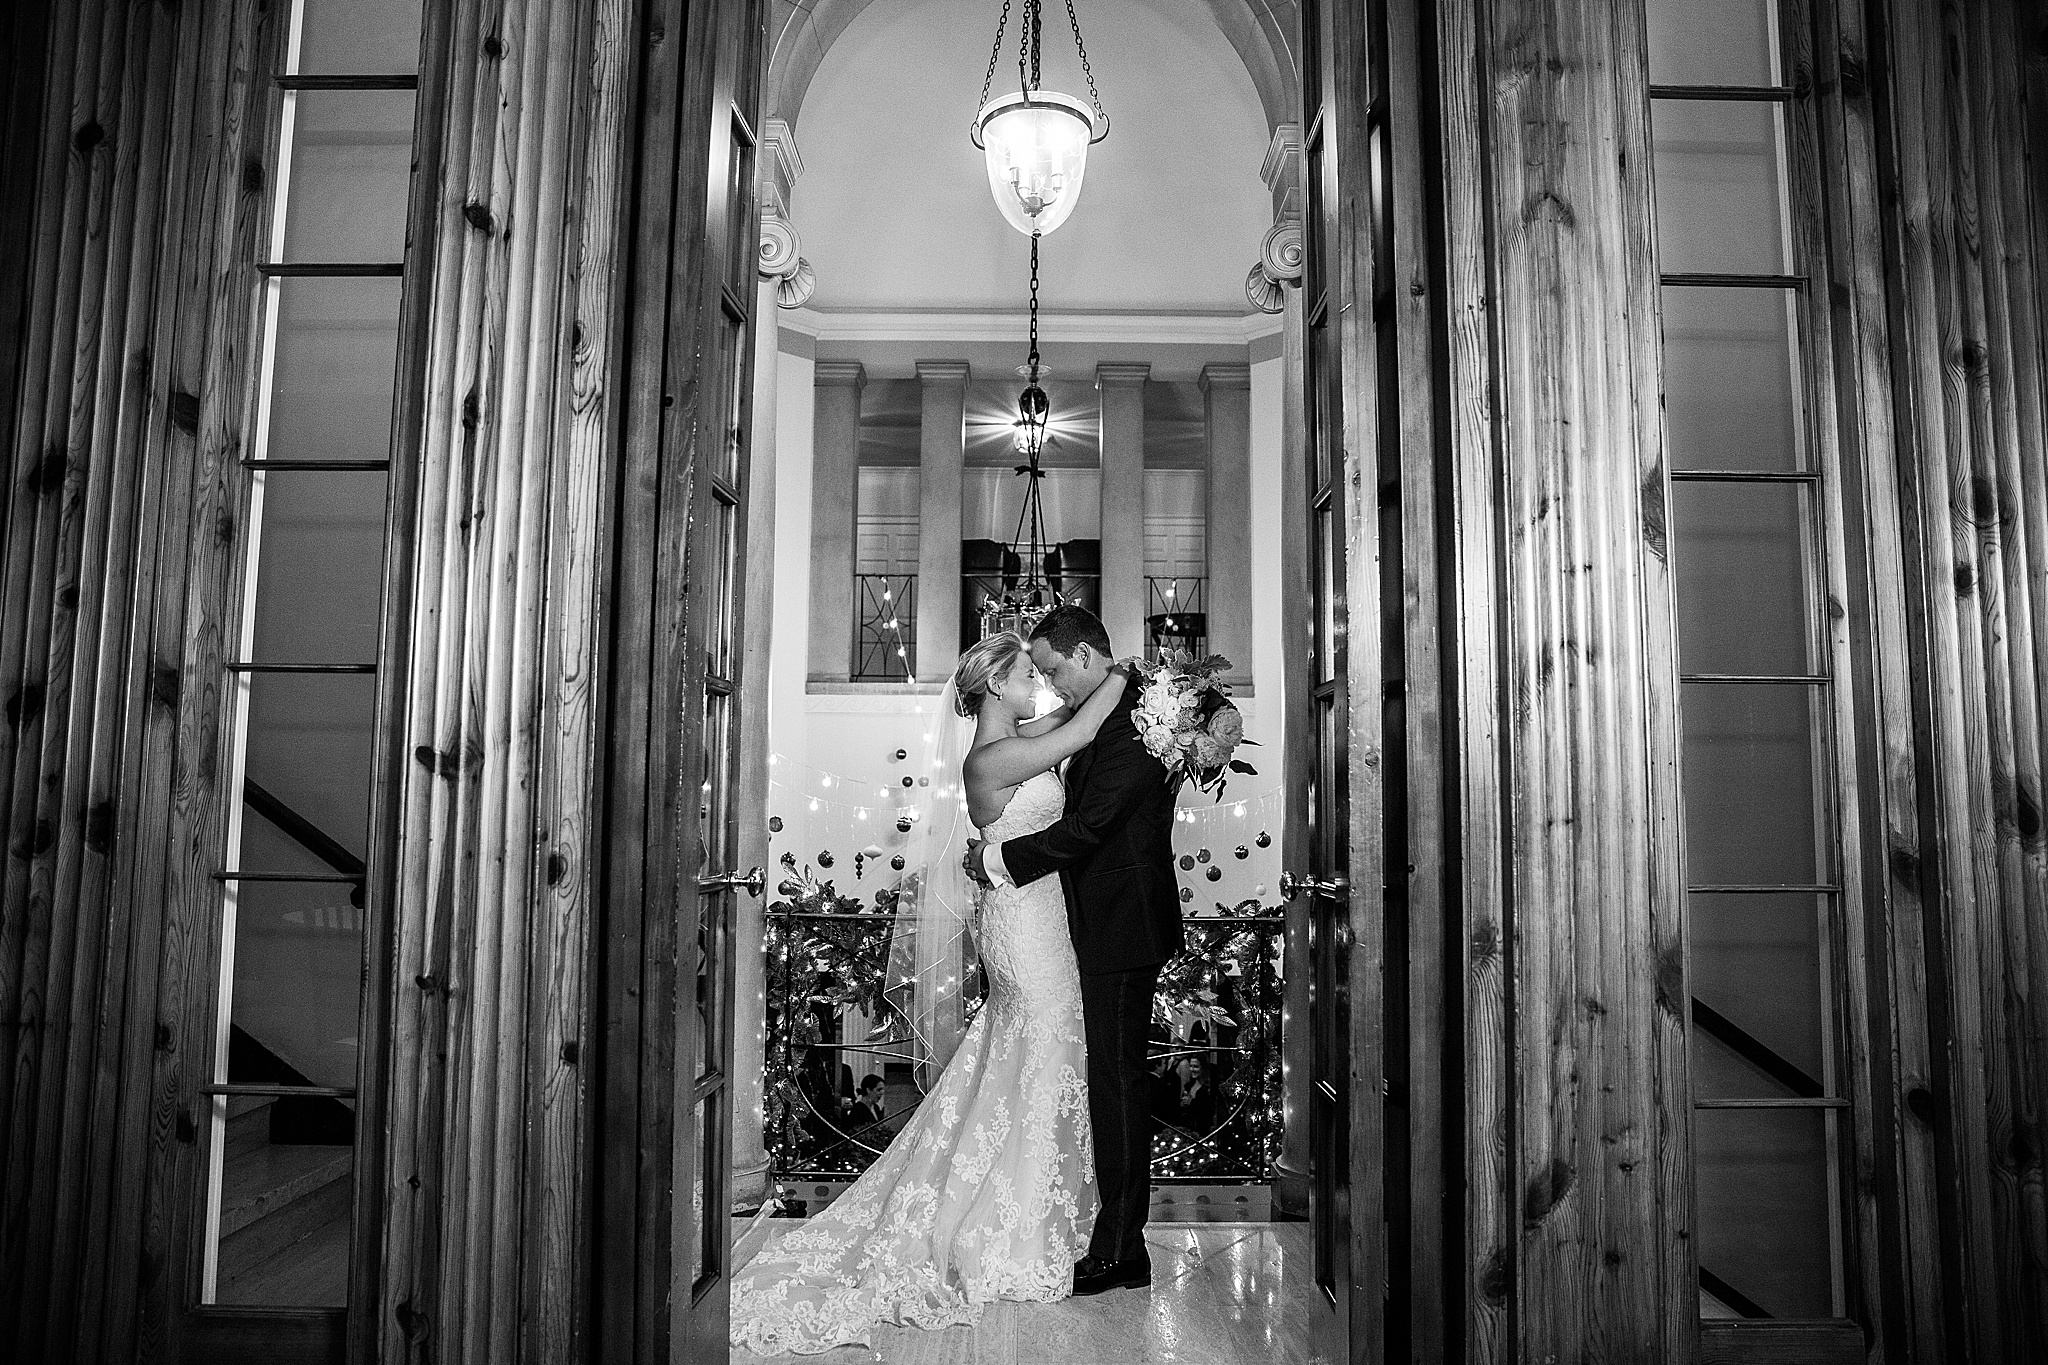 Alexandra Mandato Photography photographs Baltimore wedding portraits